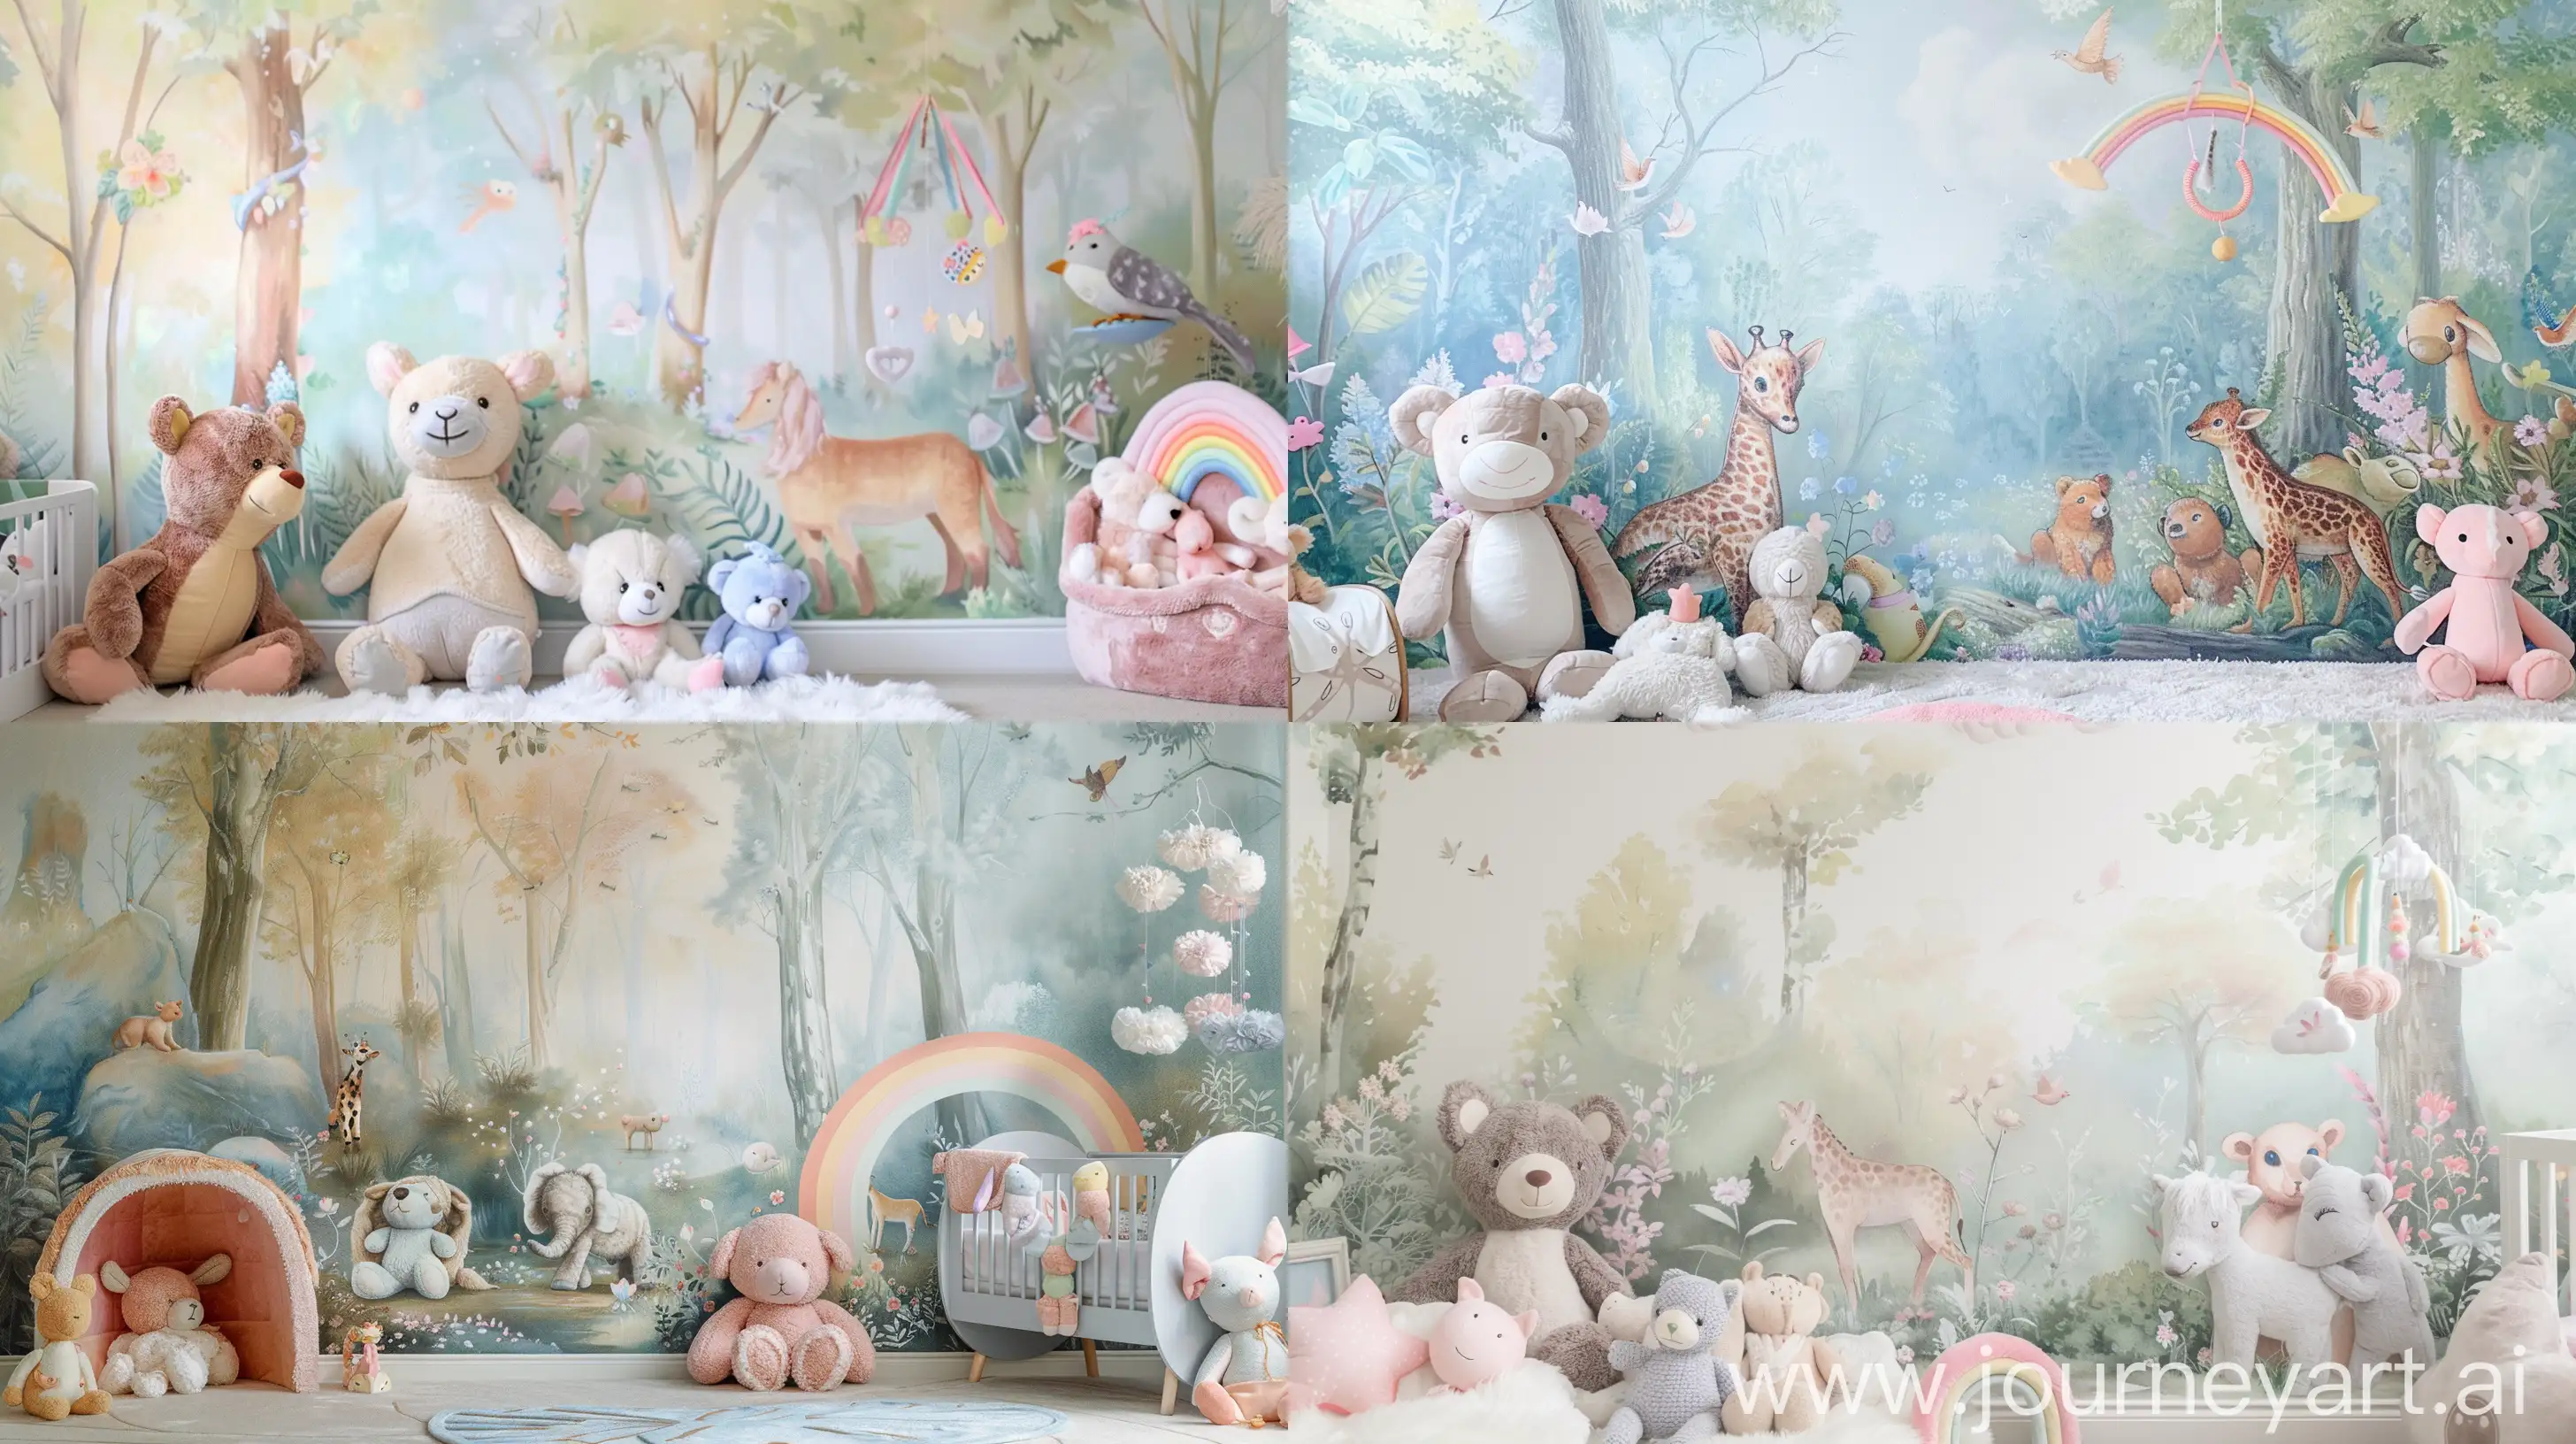 Enchanted-Forest-Nursery-Whimsical-Wonderland-with-Oversized-Plush-Animals-and-Rainbow-Mobile